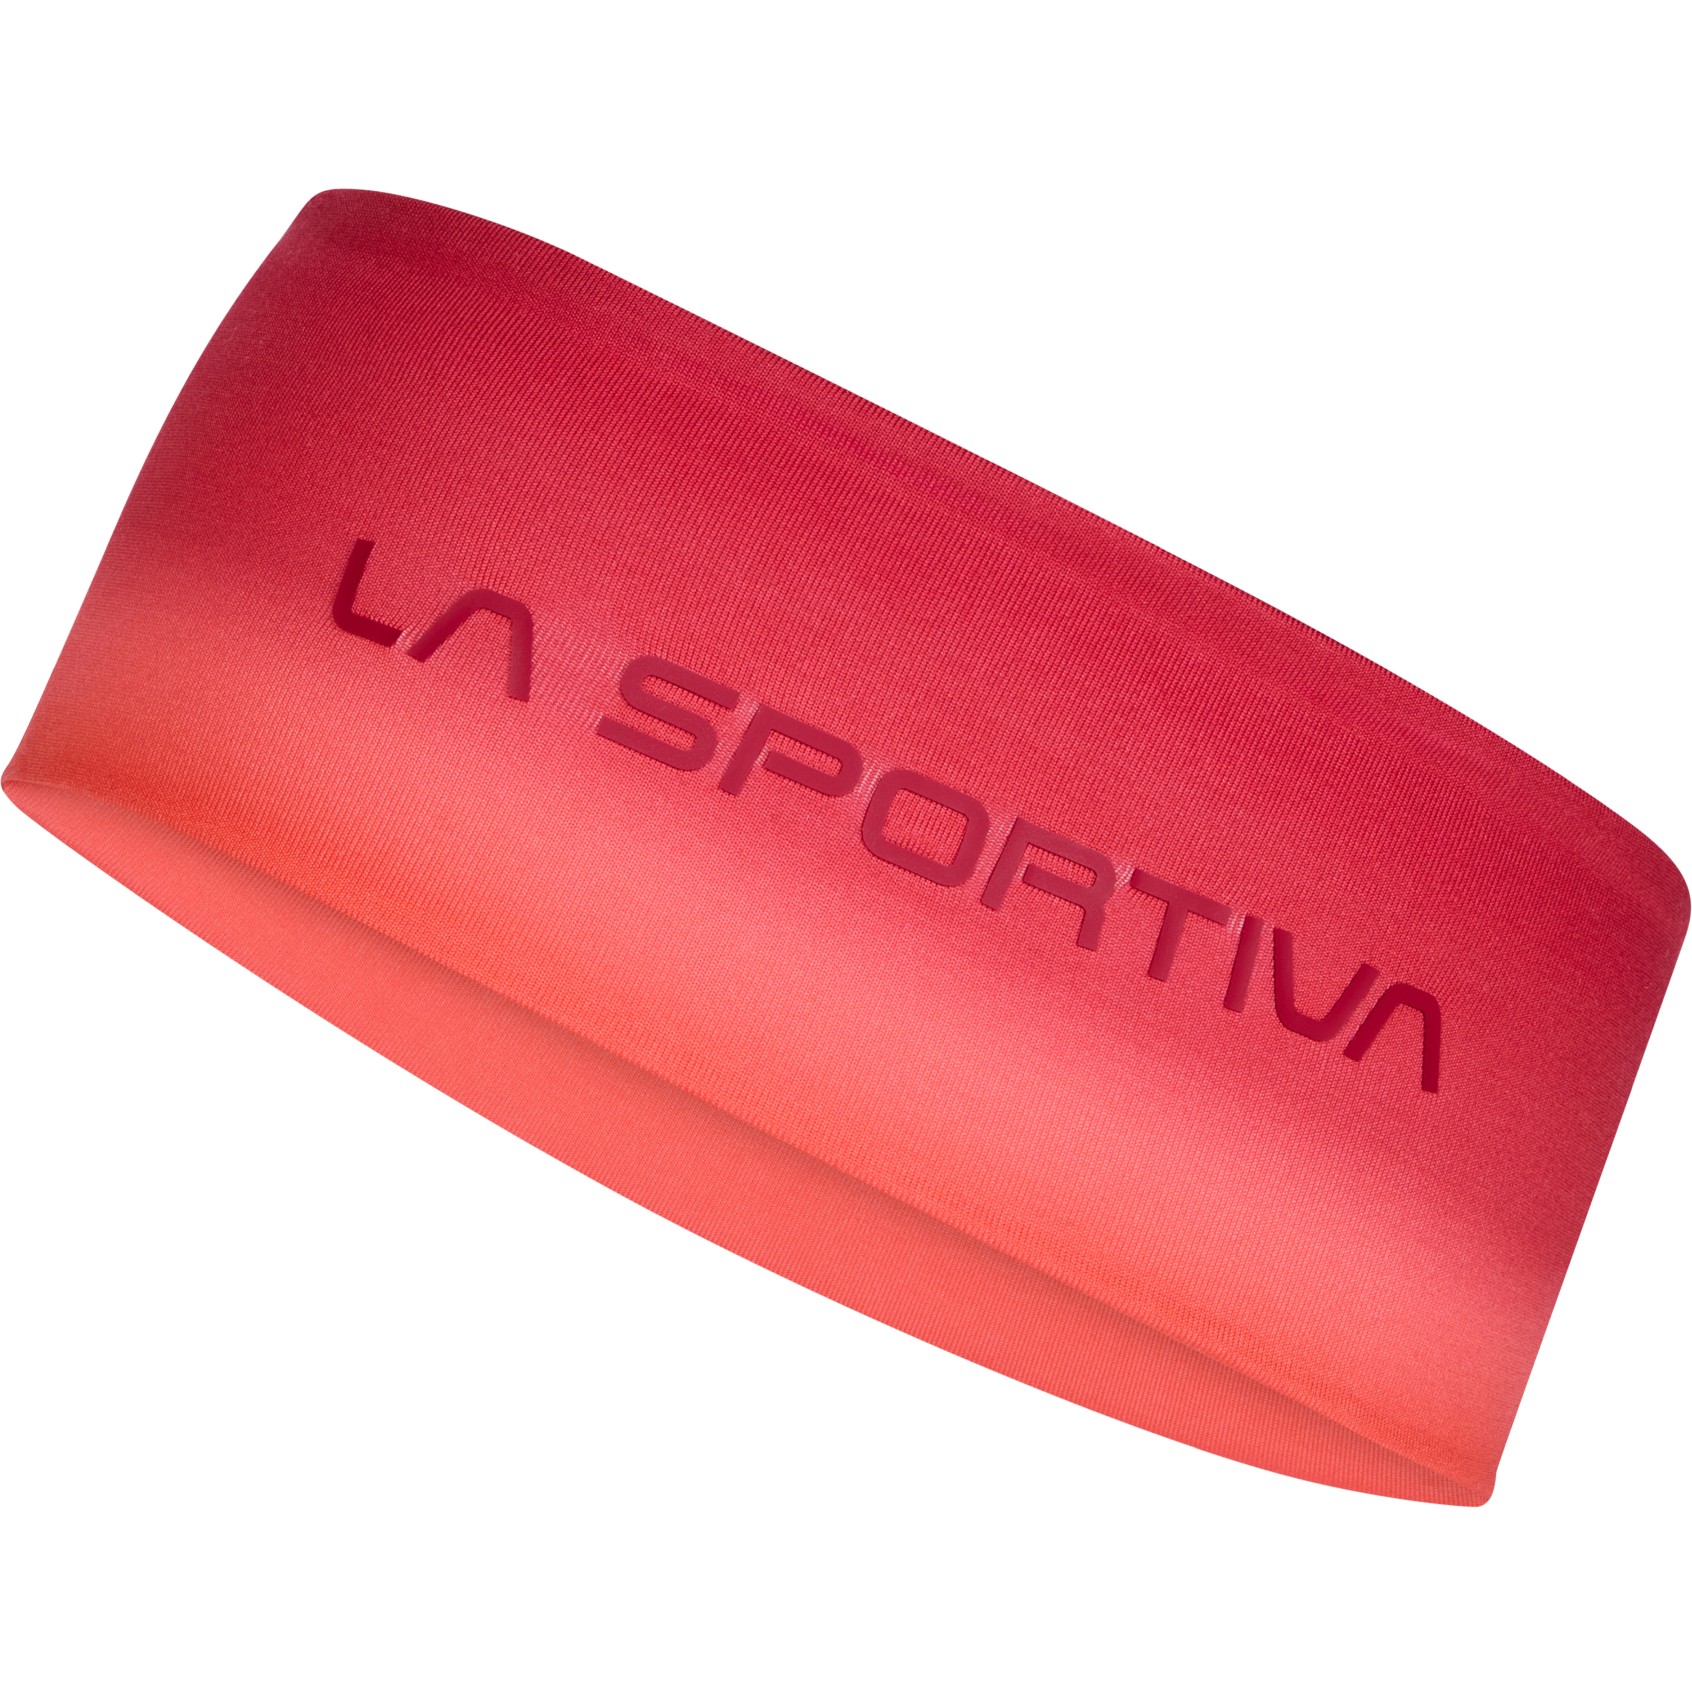 Bild von La Sportiva Fade Stirnband - Velvet/Cherry Tomato